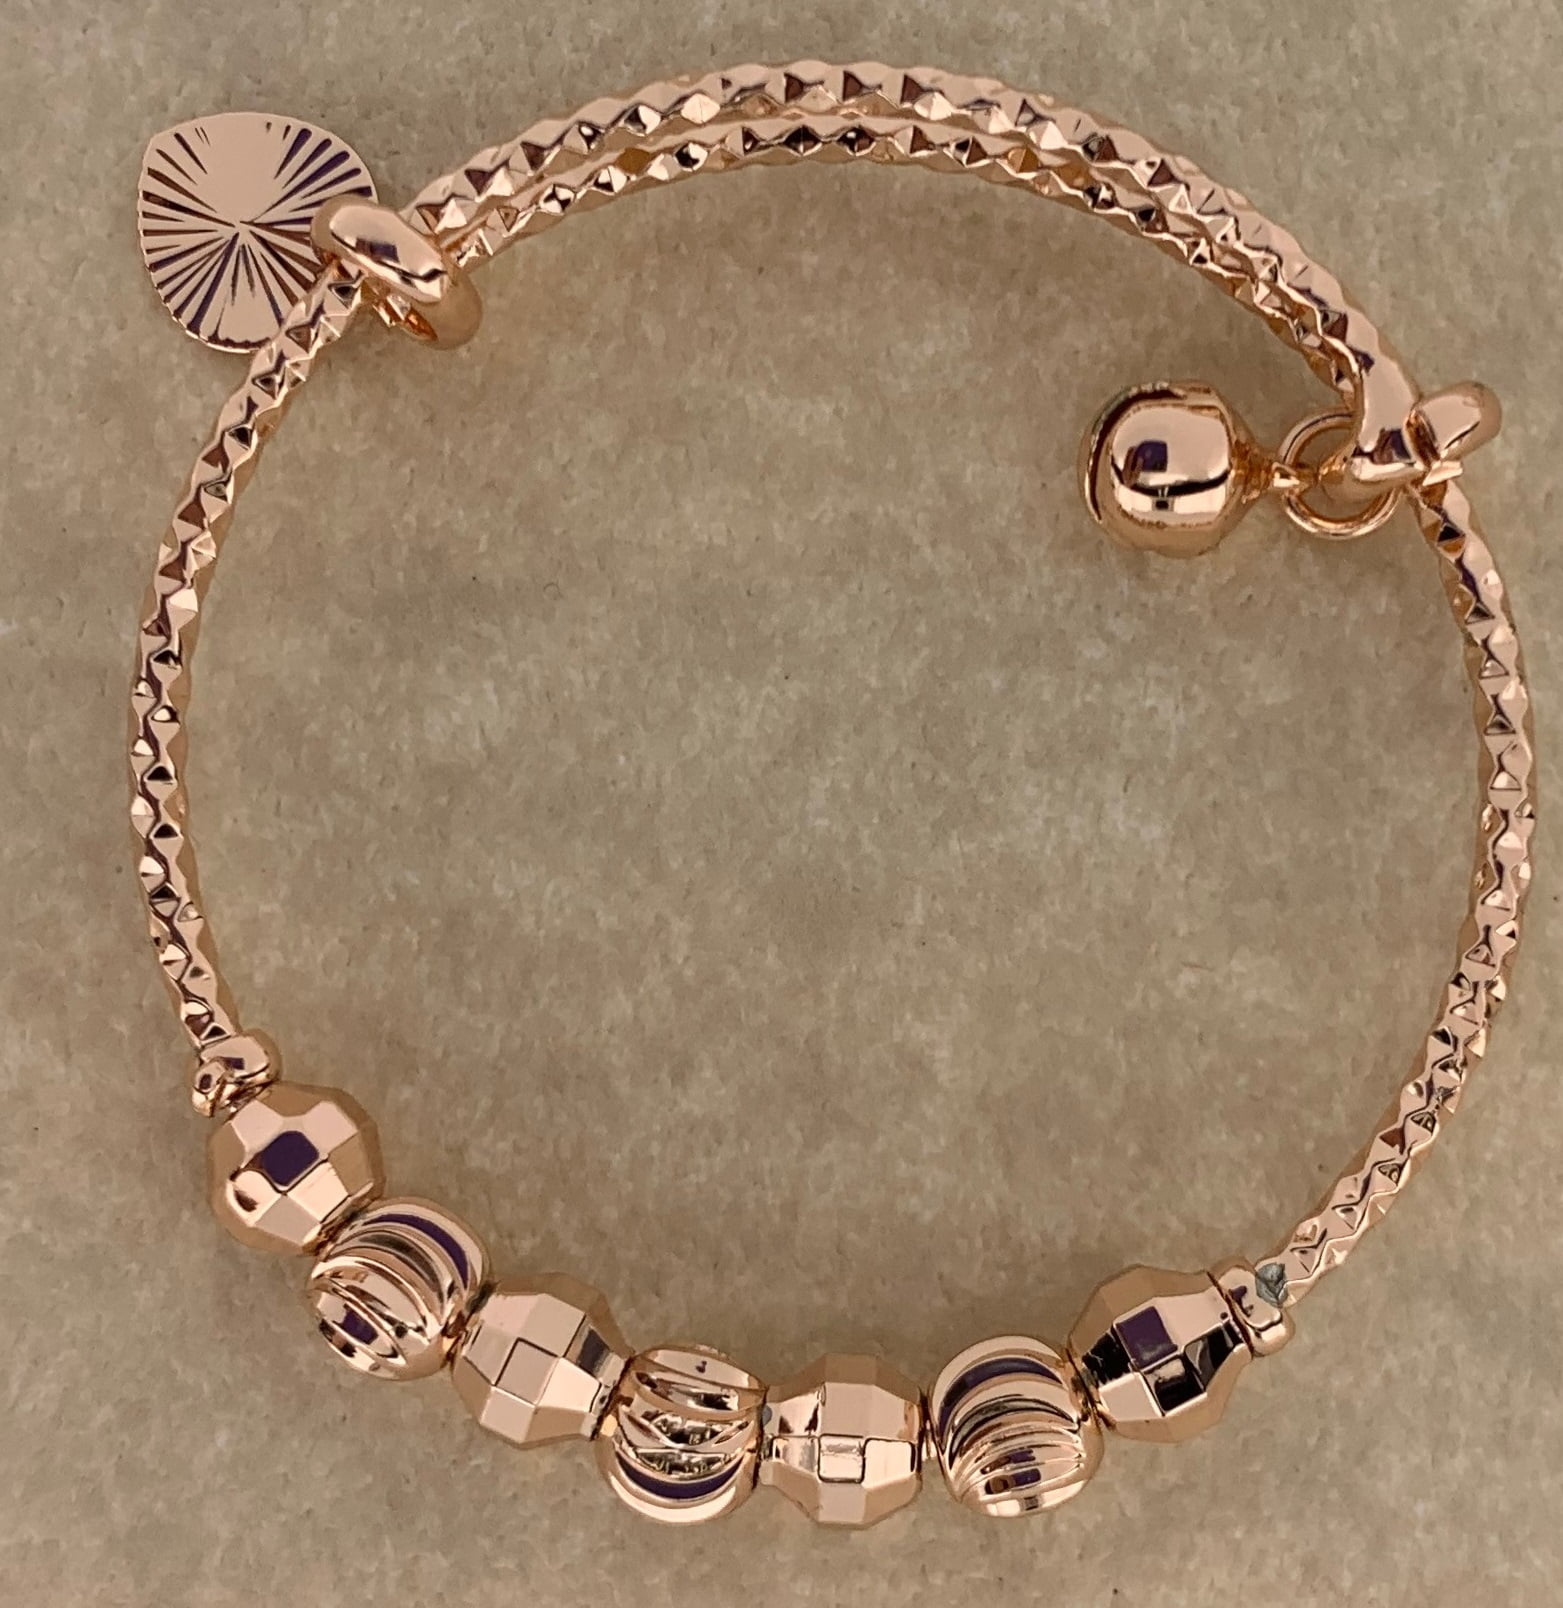 Gold Expandable Bangle Bracelets Adjustable with pink charms for girl babyshower favors